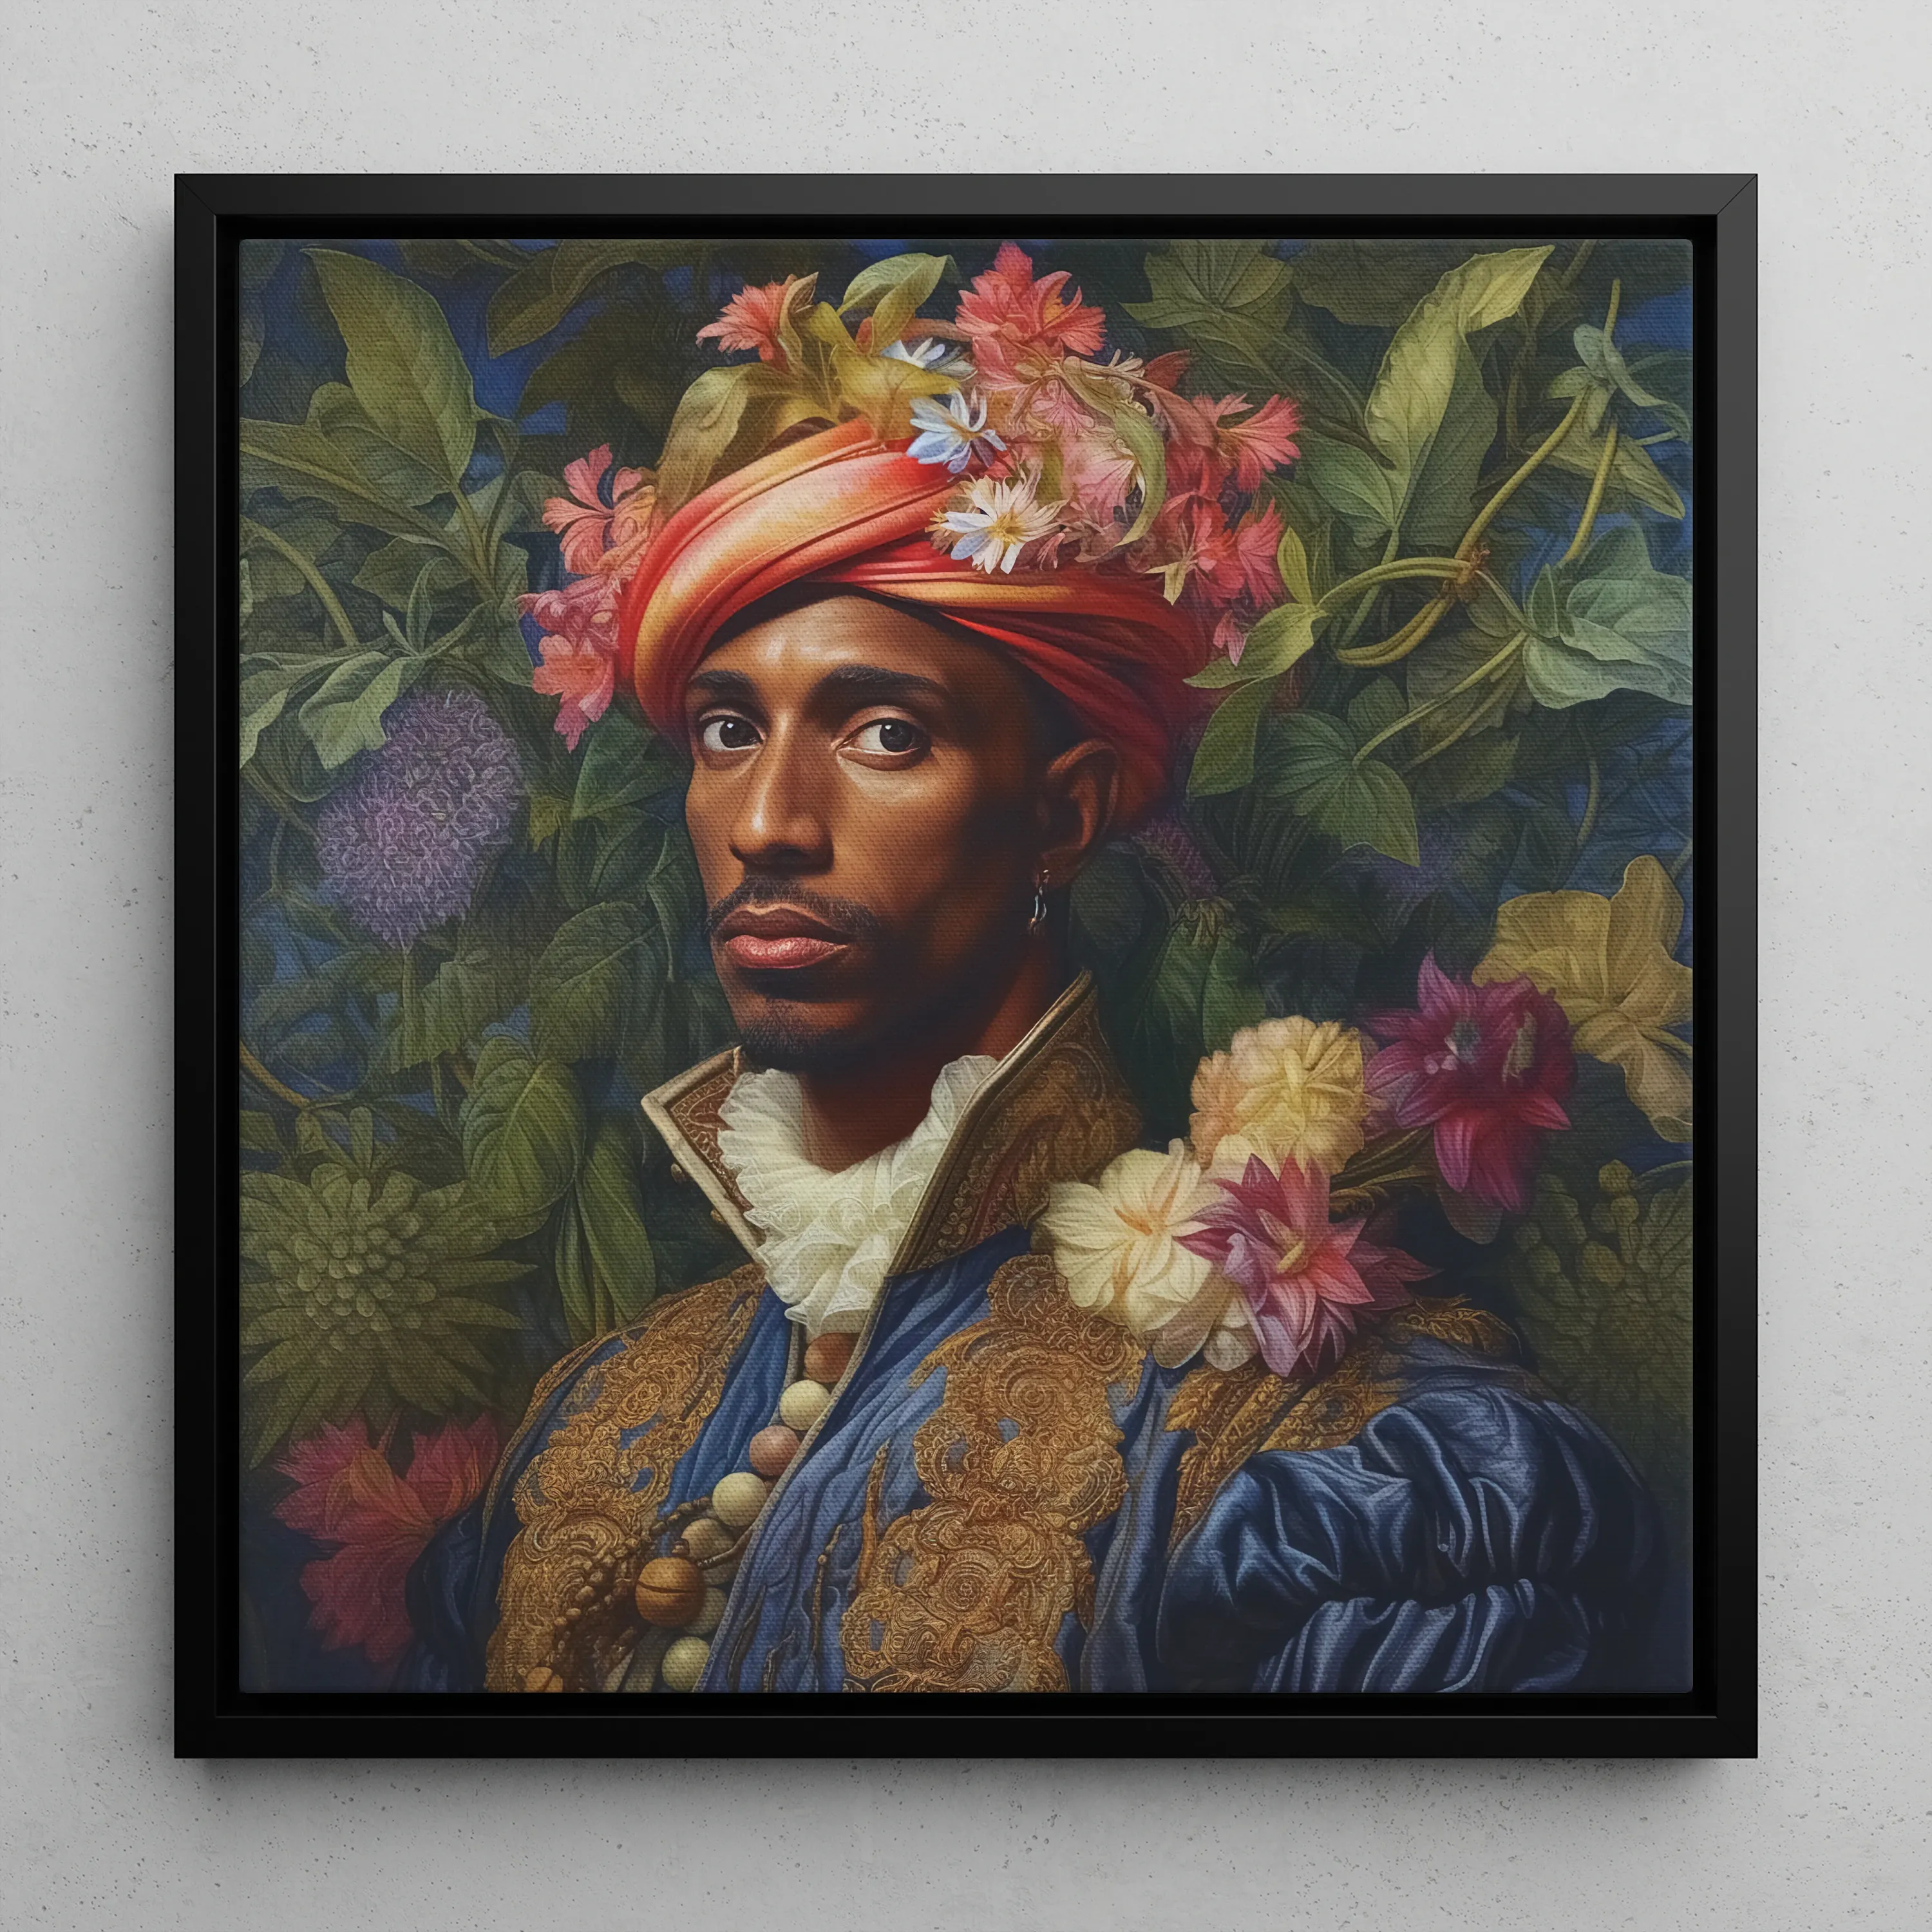 Prince Isaiah - Afroamerican Gay Black Royalty Framed Canvas - 16’x16’ - Posters Prints & Visual Artwork - Aesthetic Art